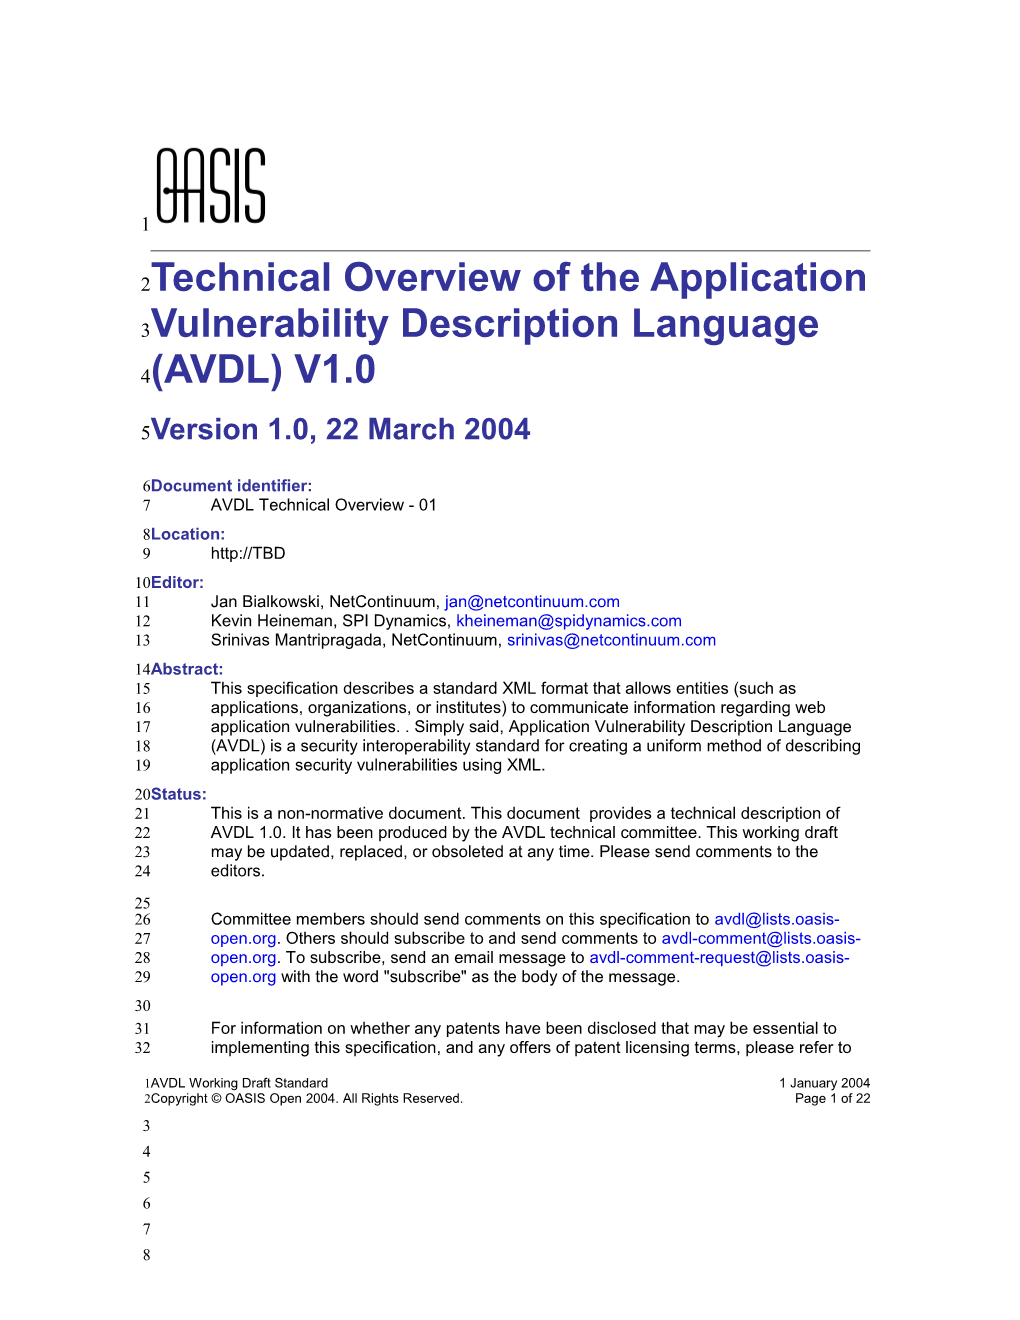 Technical Overview of the Application Vulnerability Description Language (AVDL) V1.0